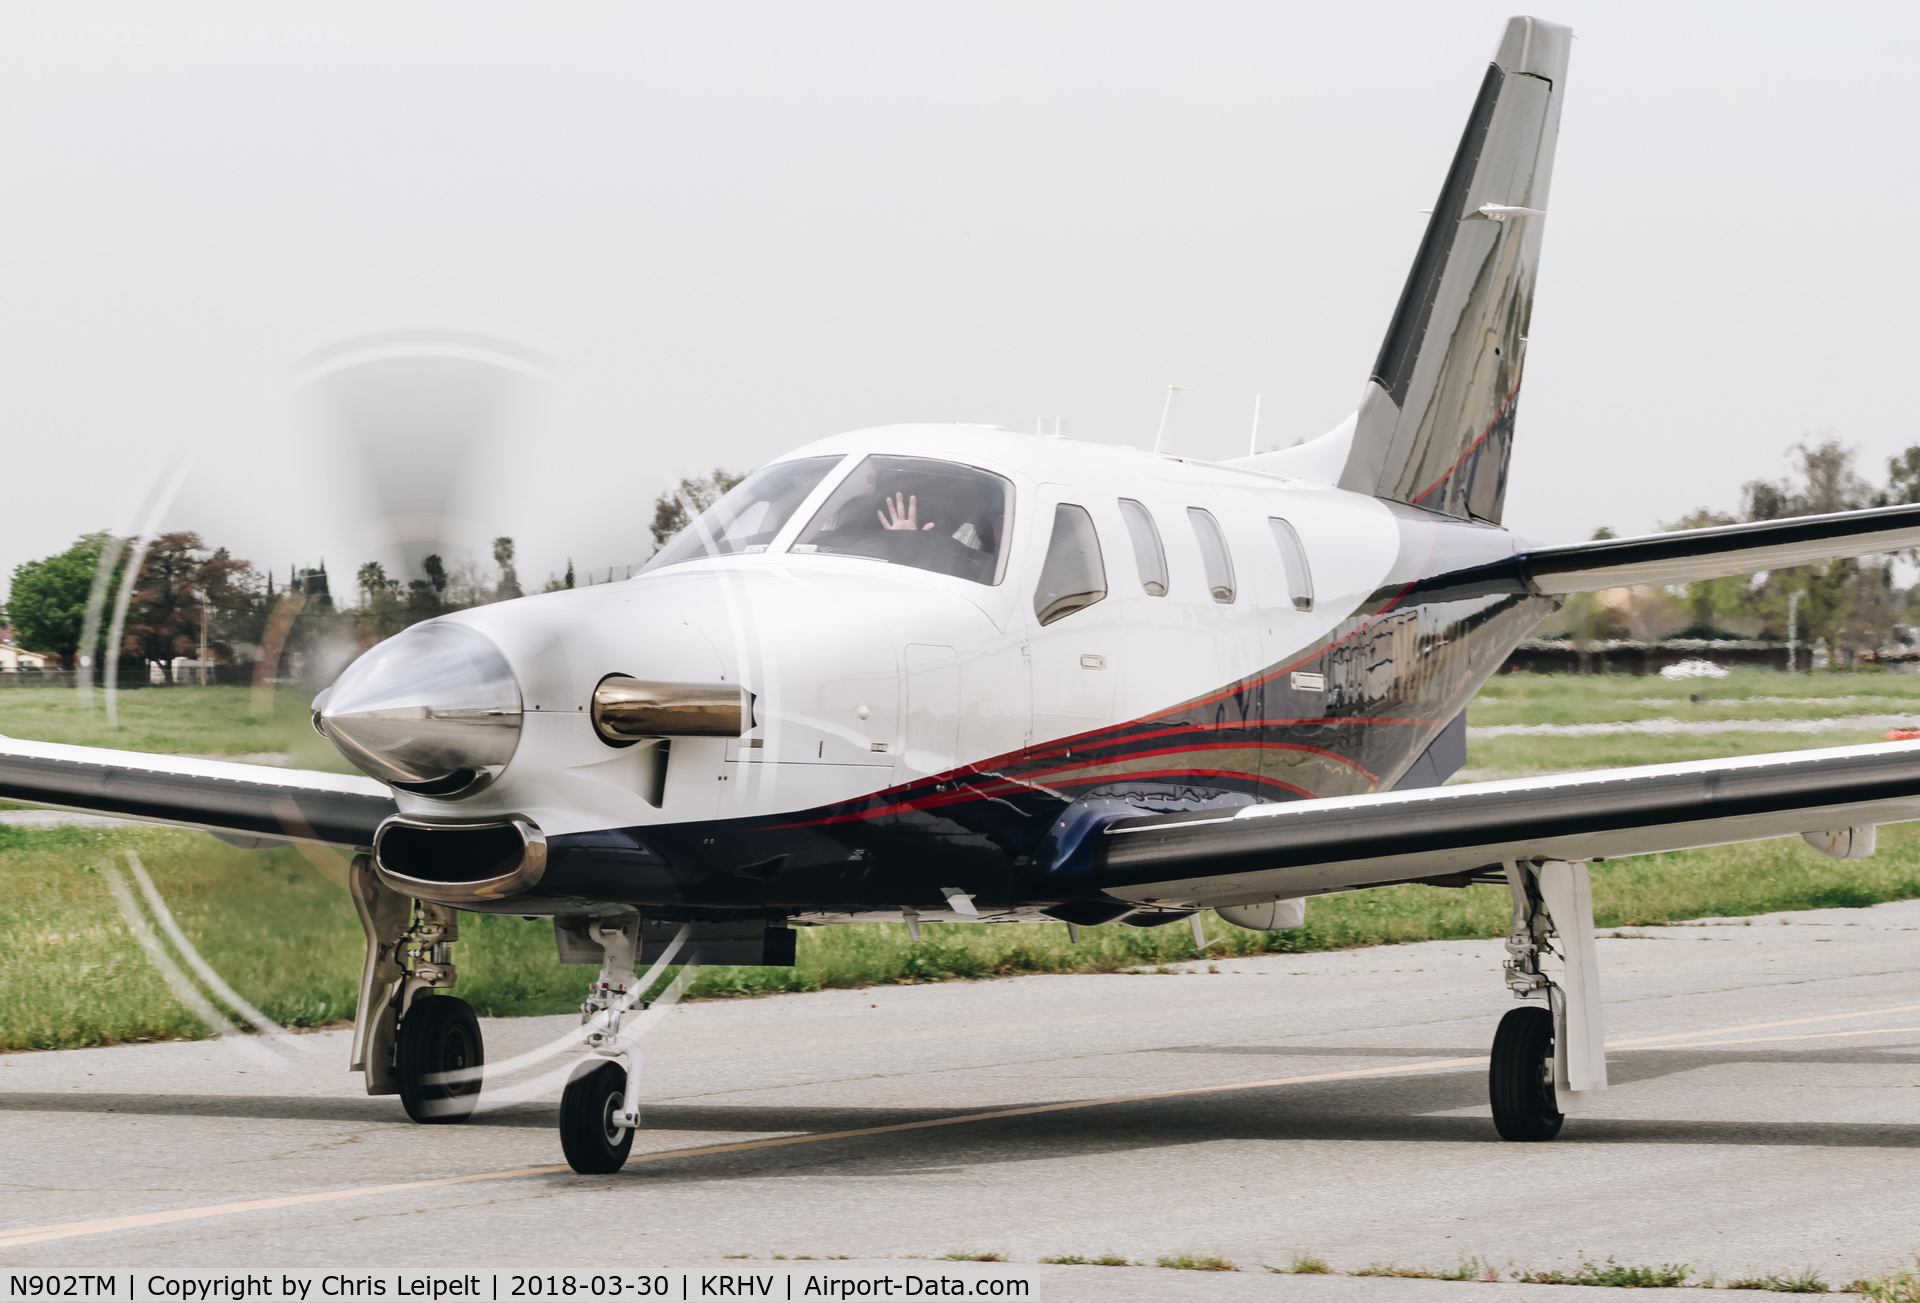 N902TM, 2015 Socata TBM-900 C/N 1103, Locally-based 2015 Socata TBM-900 taxing to its hangar at Reid Hillview Airport, San Jose, CA.